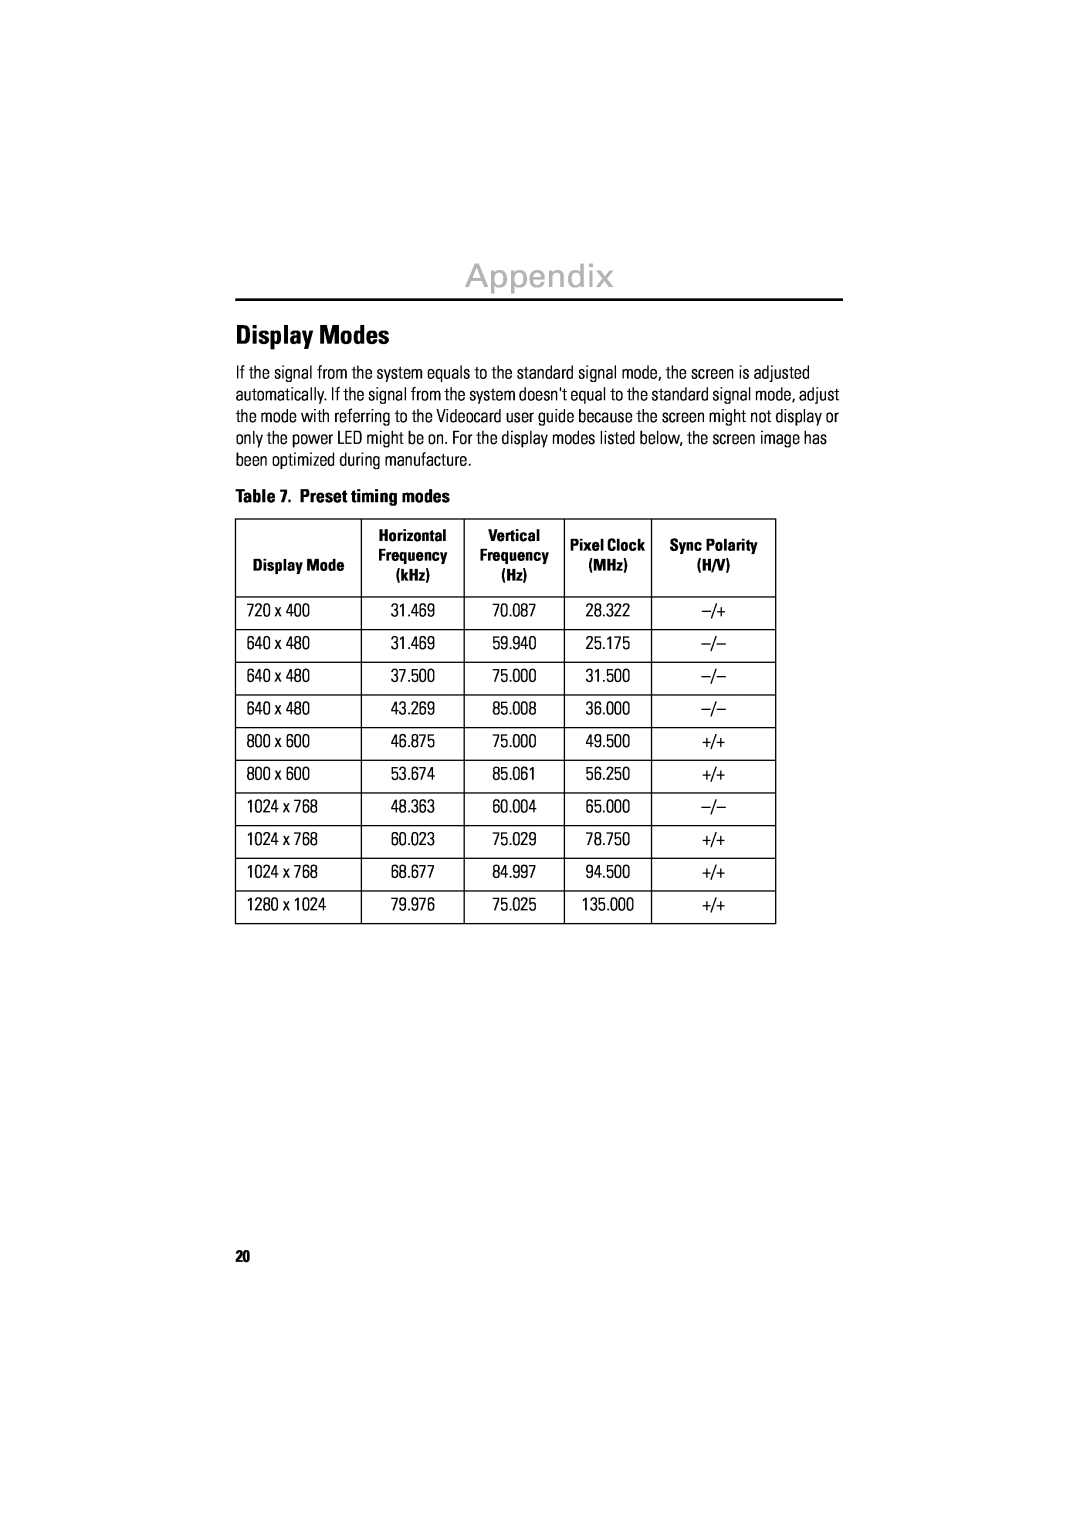 Samsung 800TFT manual Display Modes, Preset timing modes, Appendix 